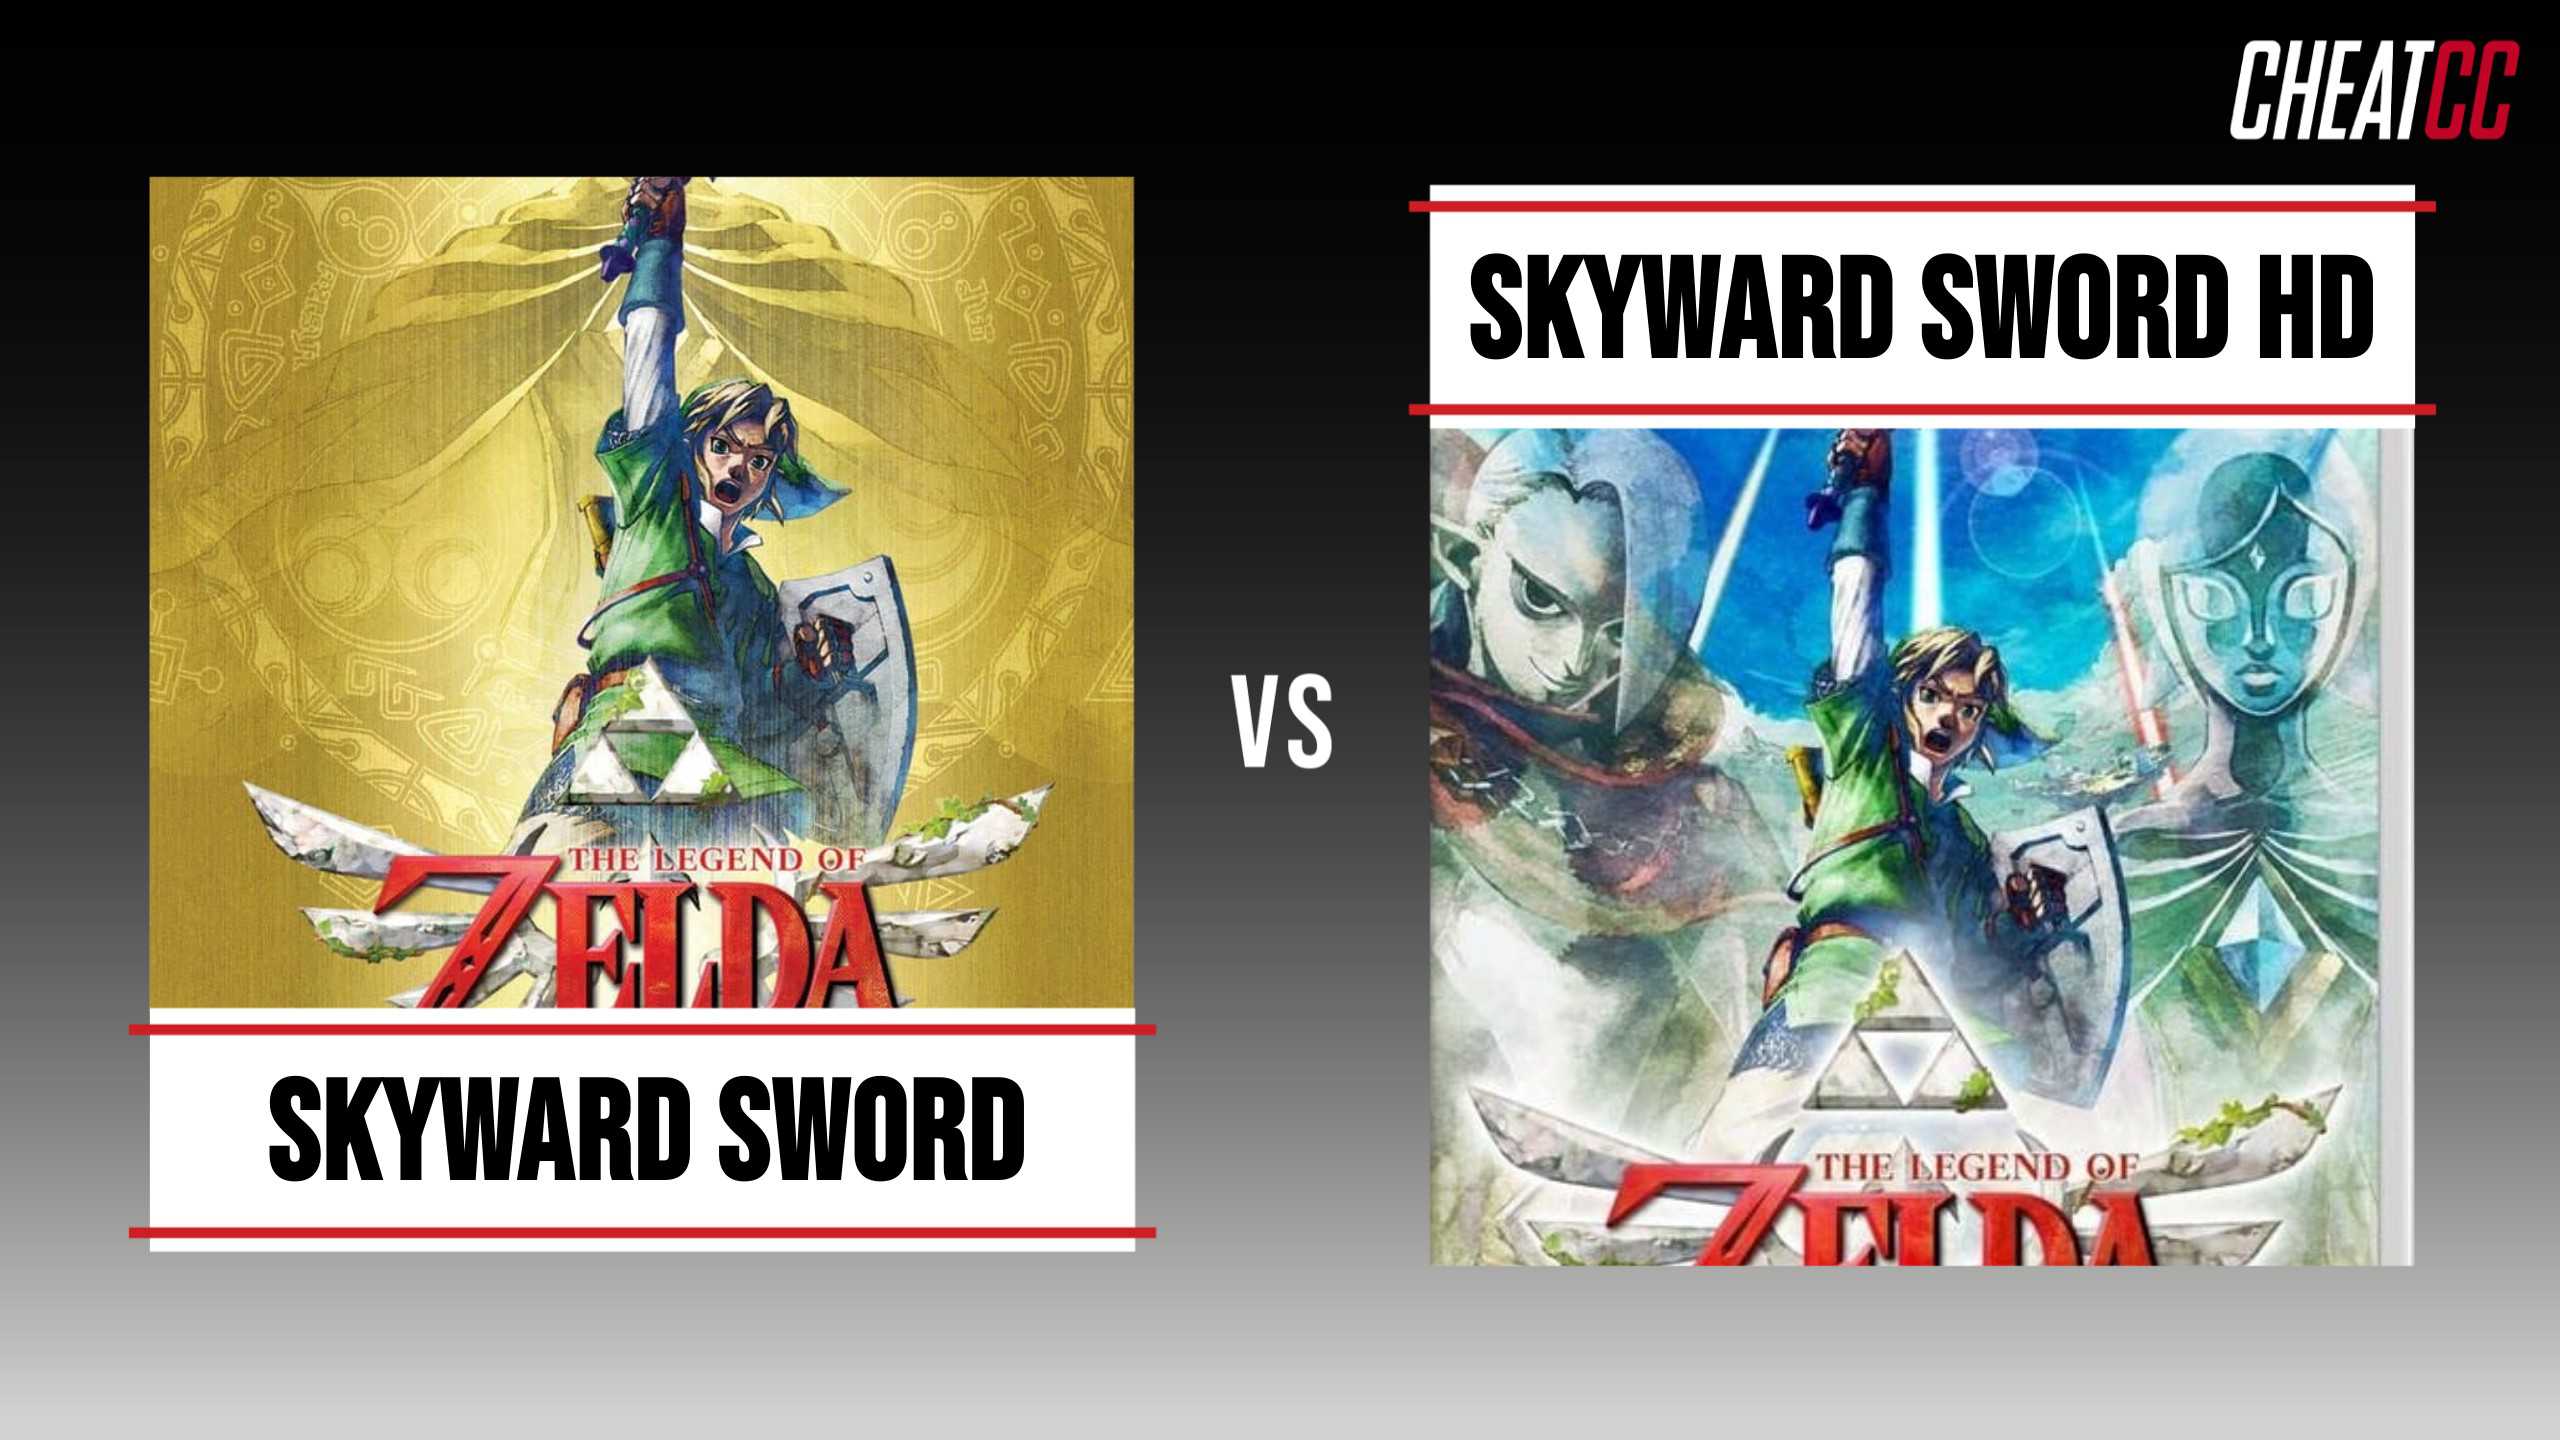 The Legend of Zelda: Skyward Sword HD - Nintendo Switch, Nintendo Switch